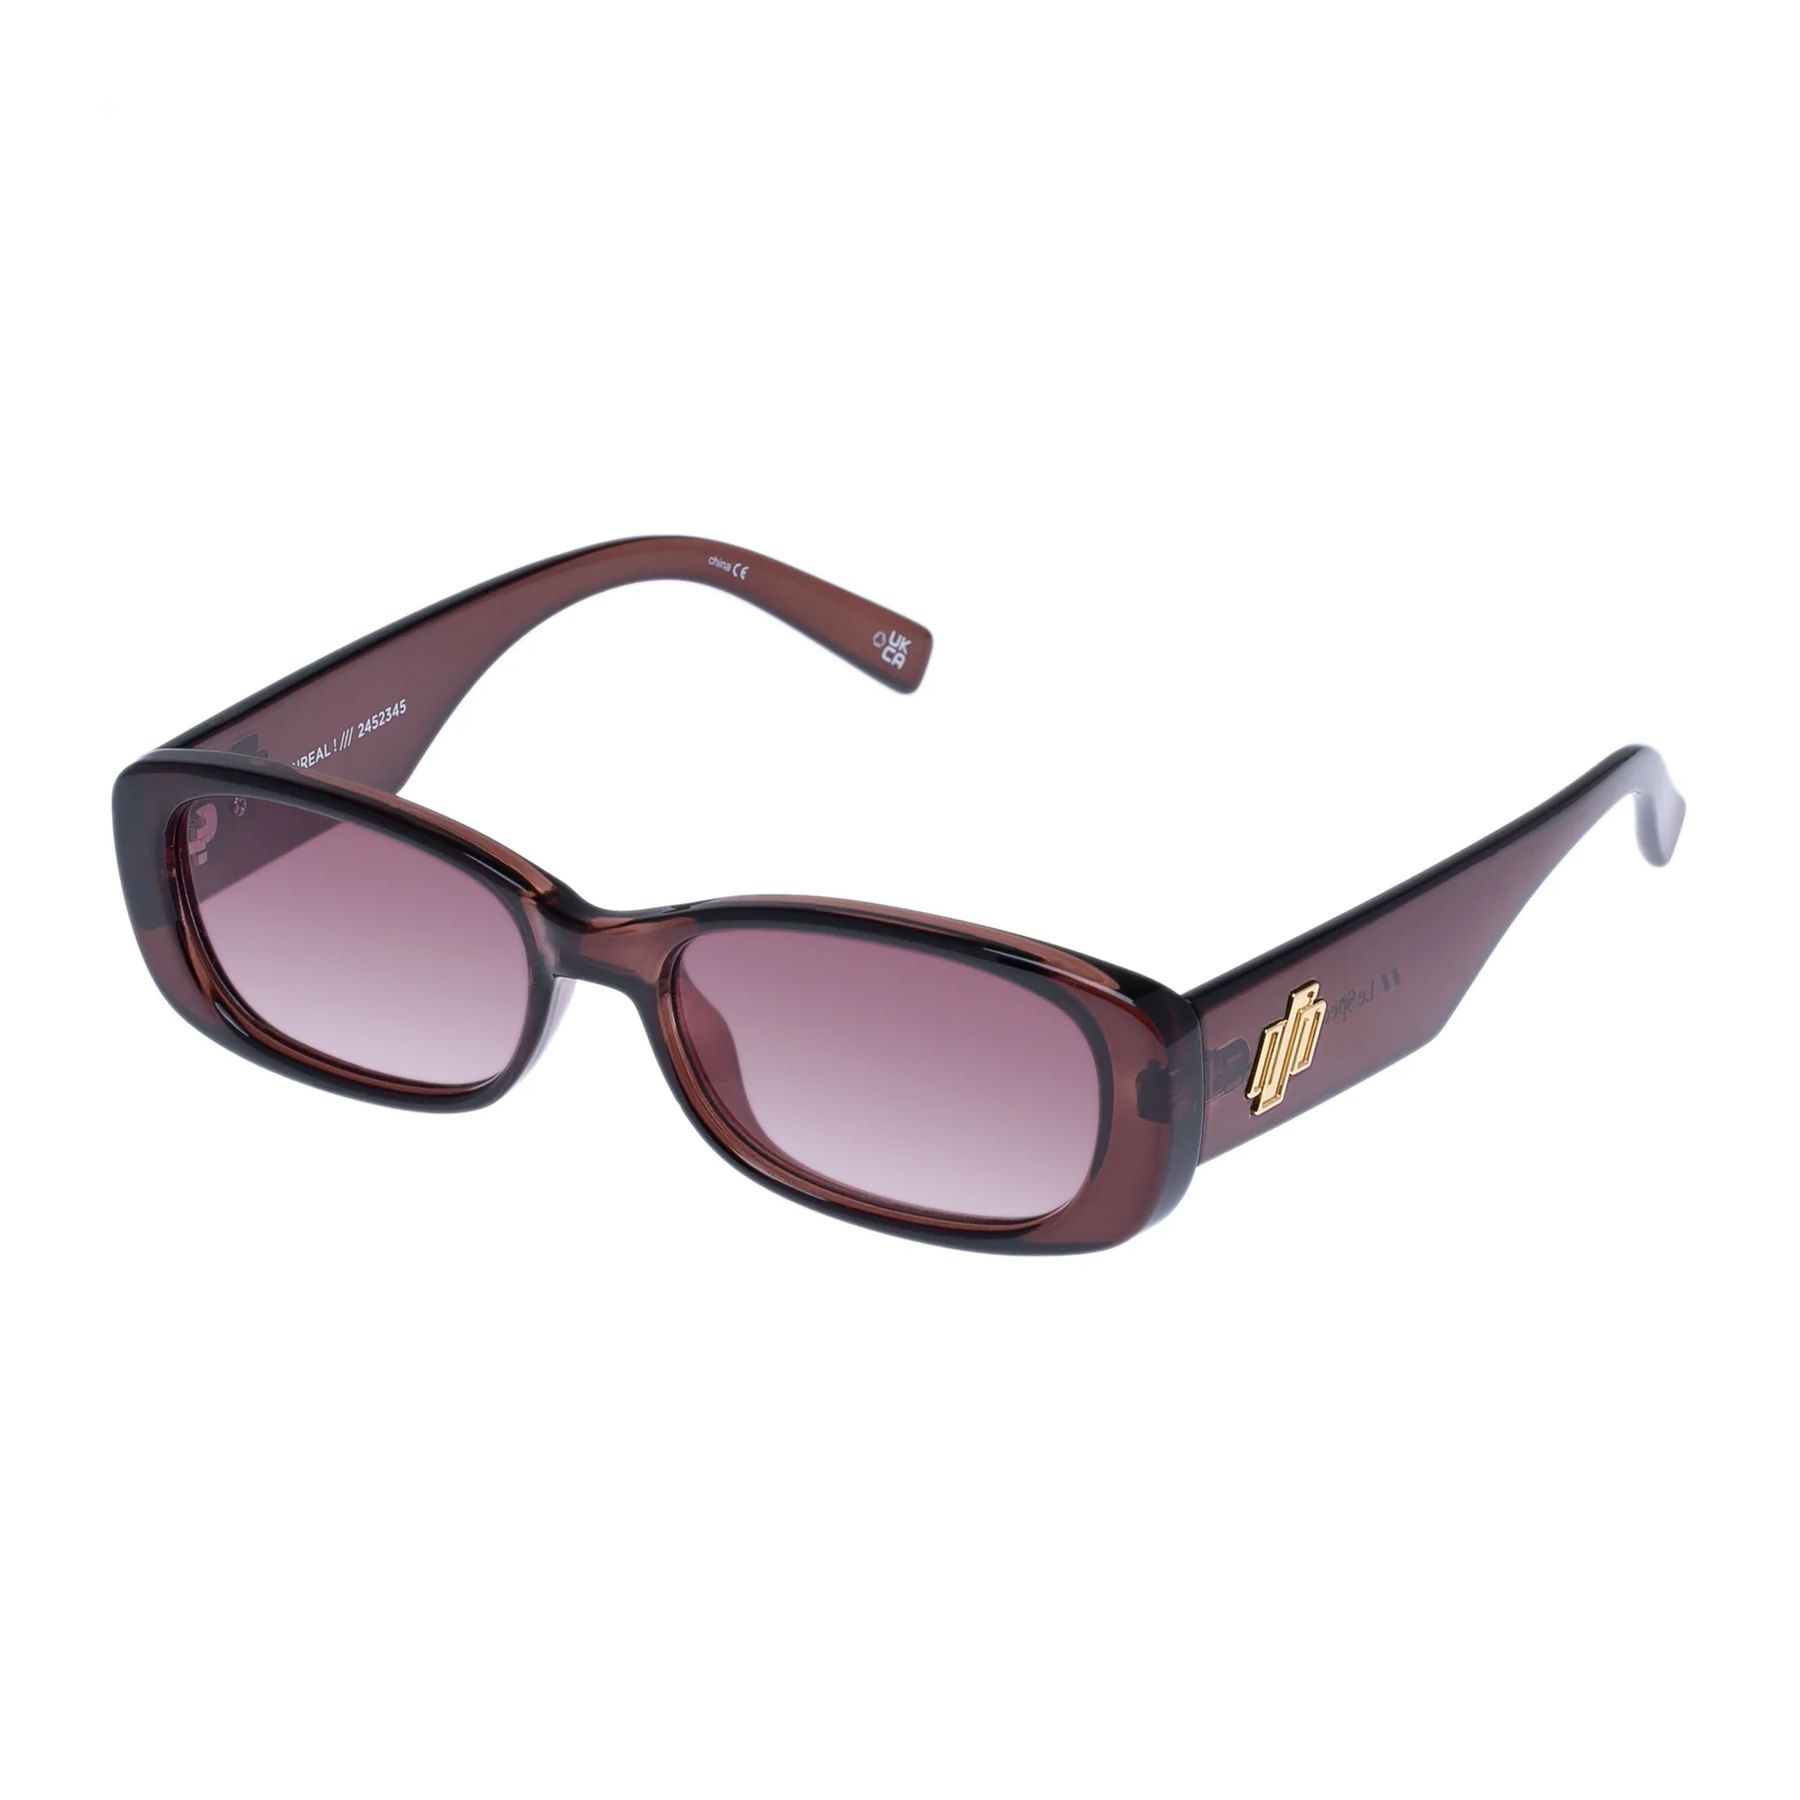 UNREAL Rectangle Sunglasses CHOCOLATE - size 52